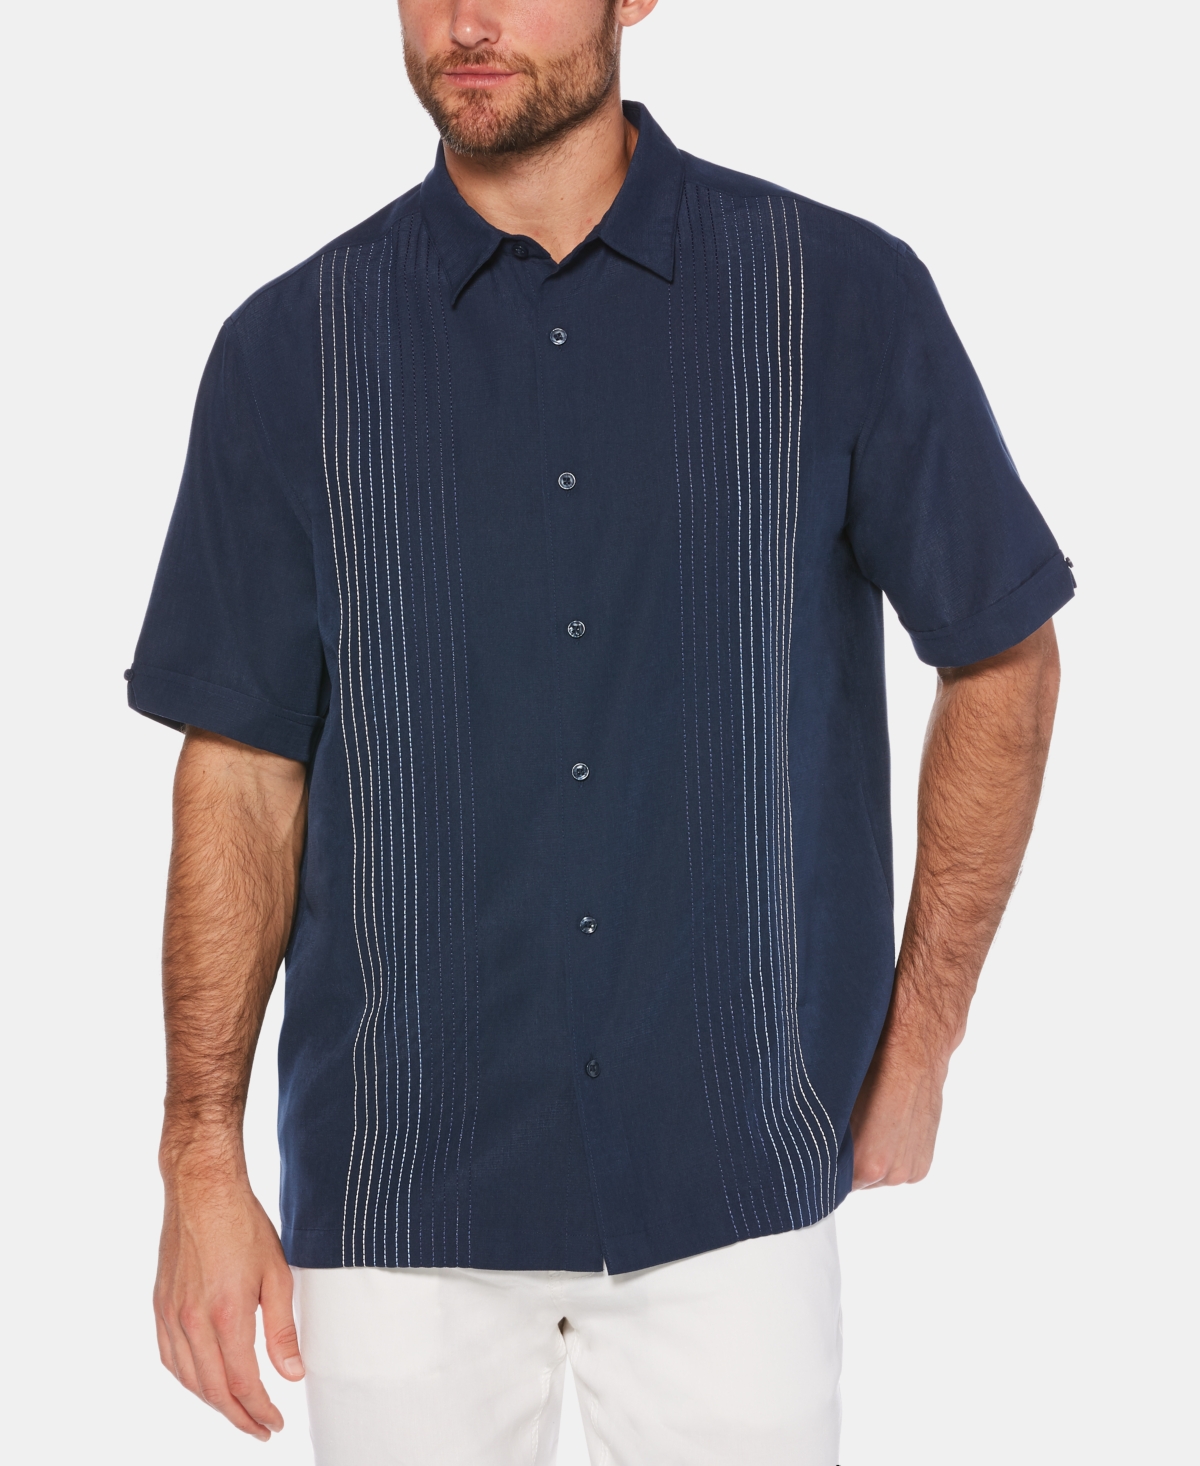 Cubavera Men's Ombre Stripe Shirt